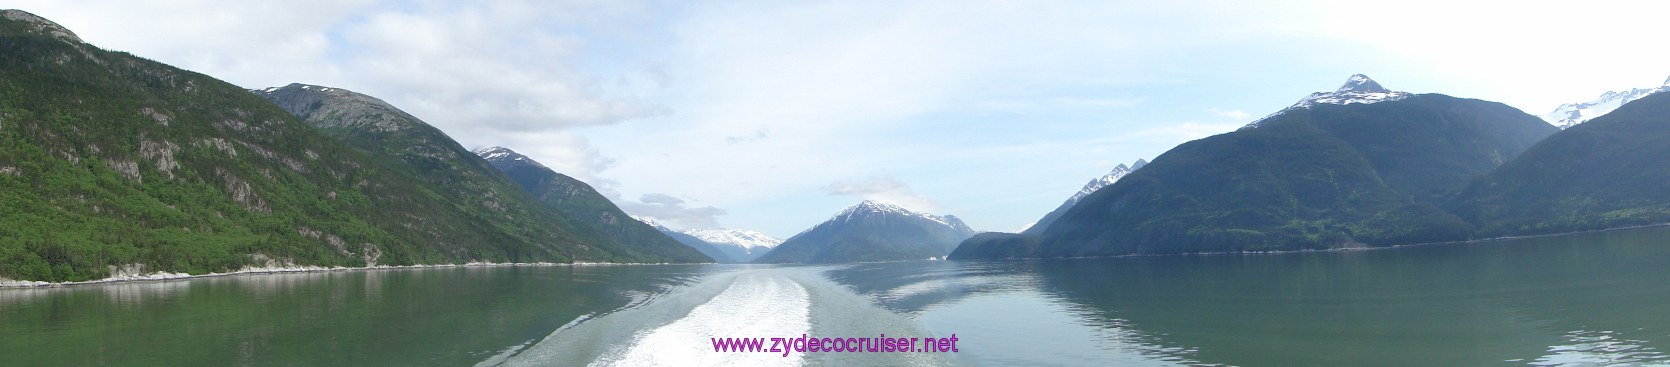 014: Carnival Spirit, Skagway, Alaska - Eagle Preserve Wildlife River Adventure 